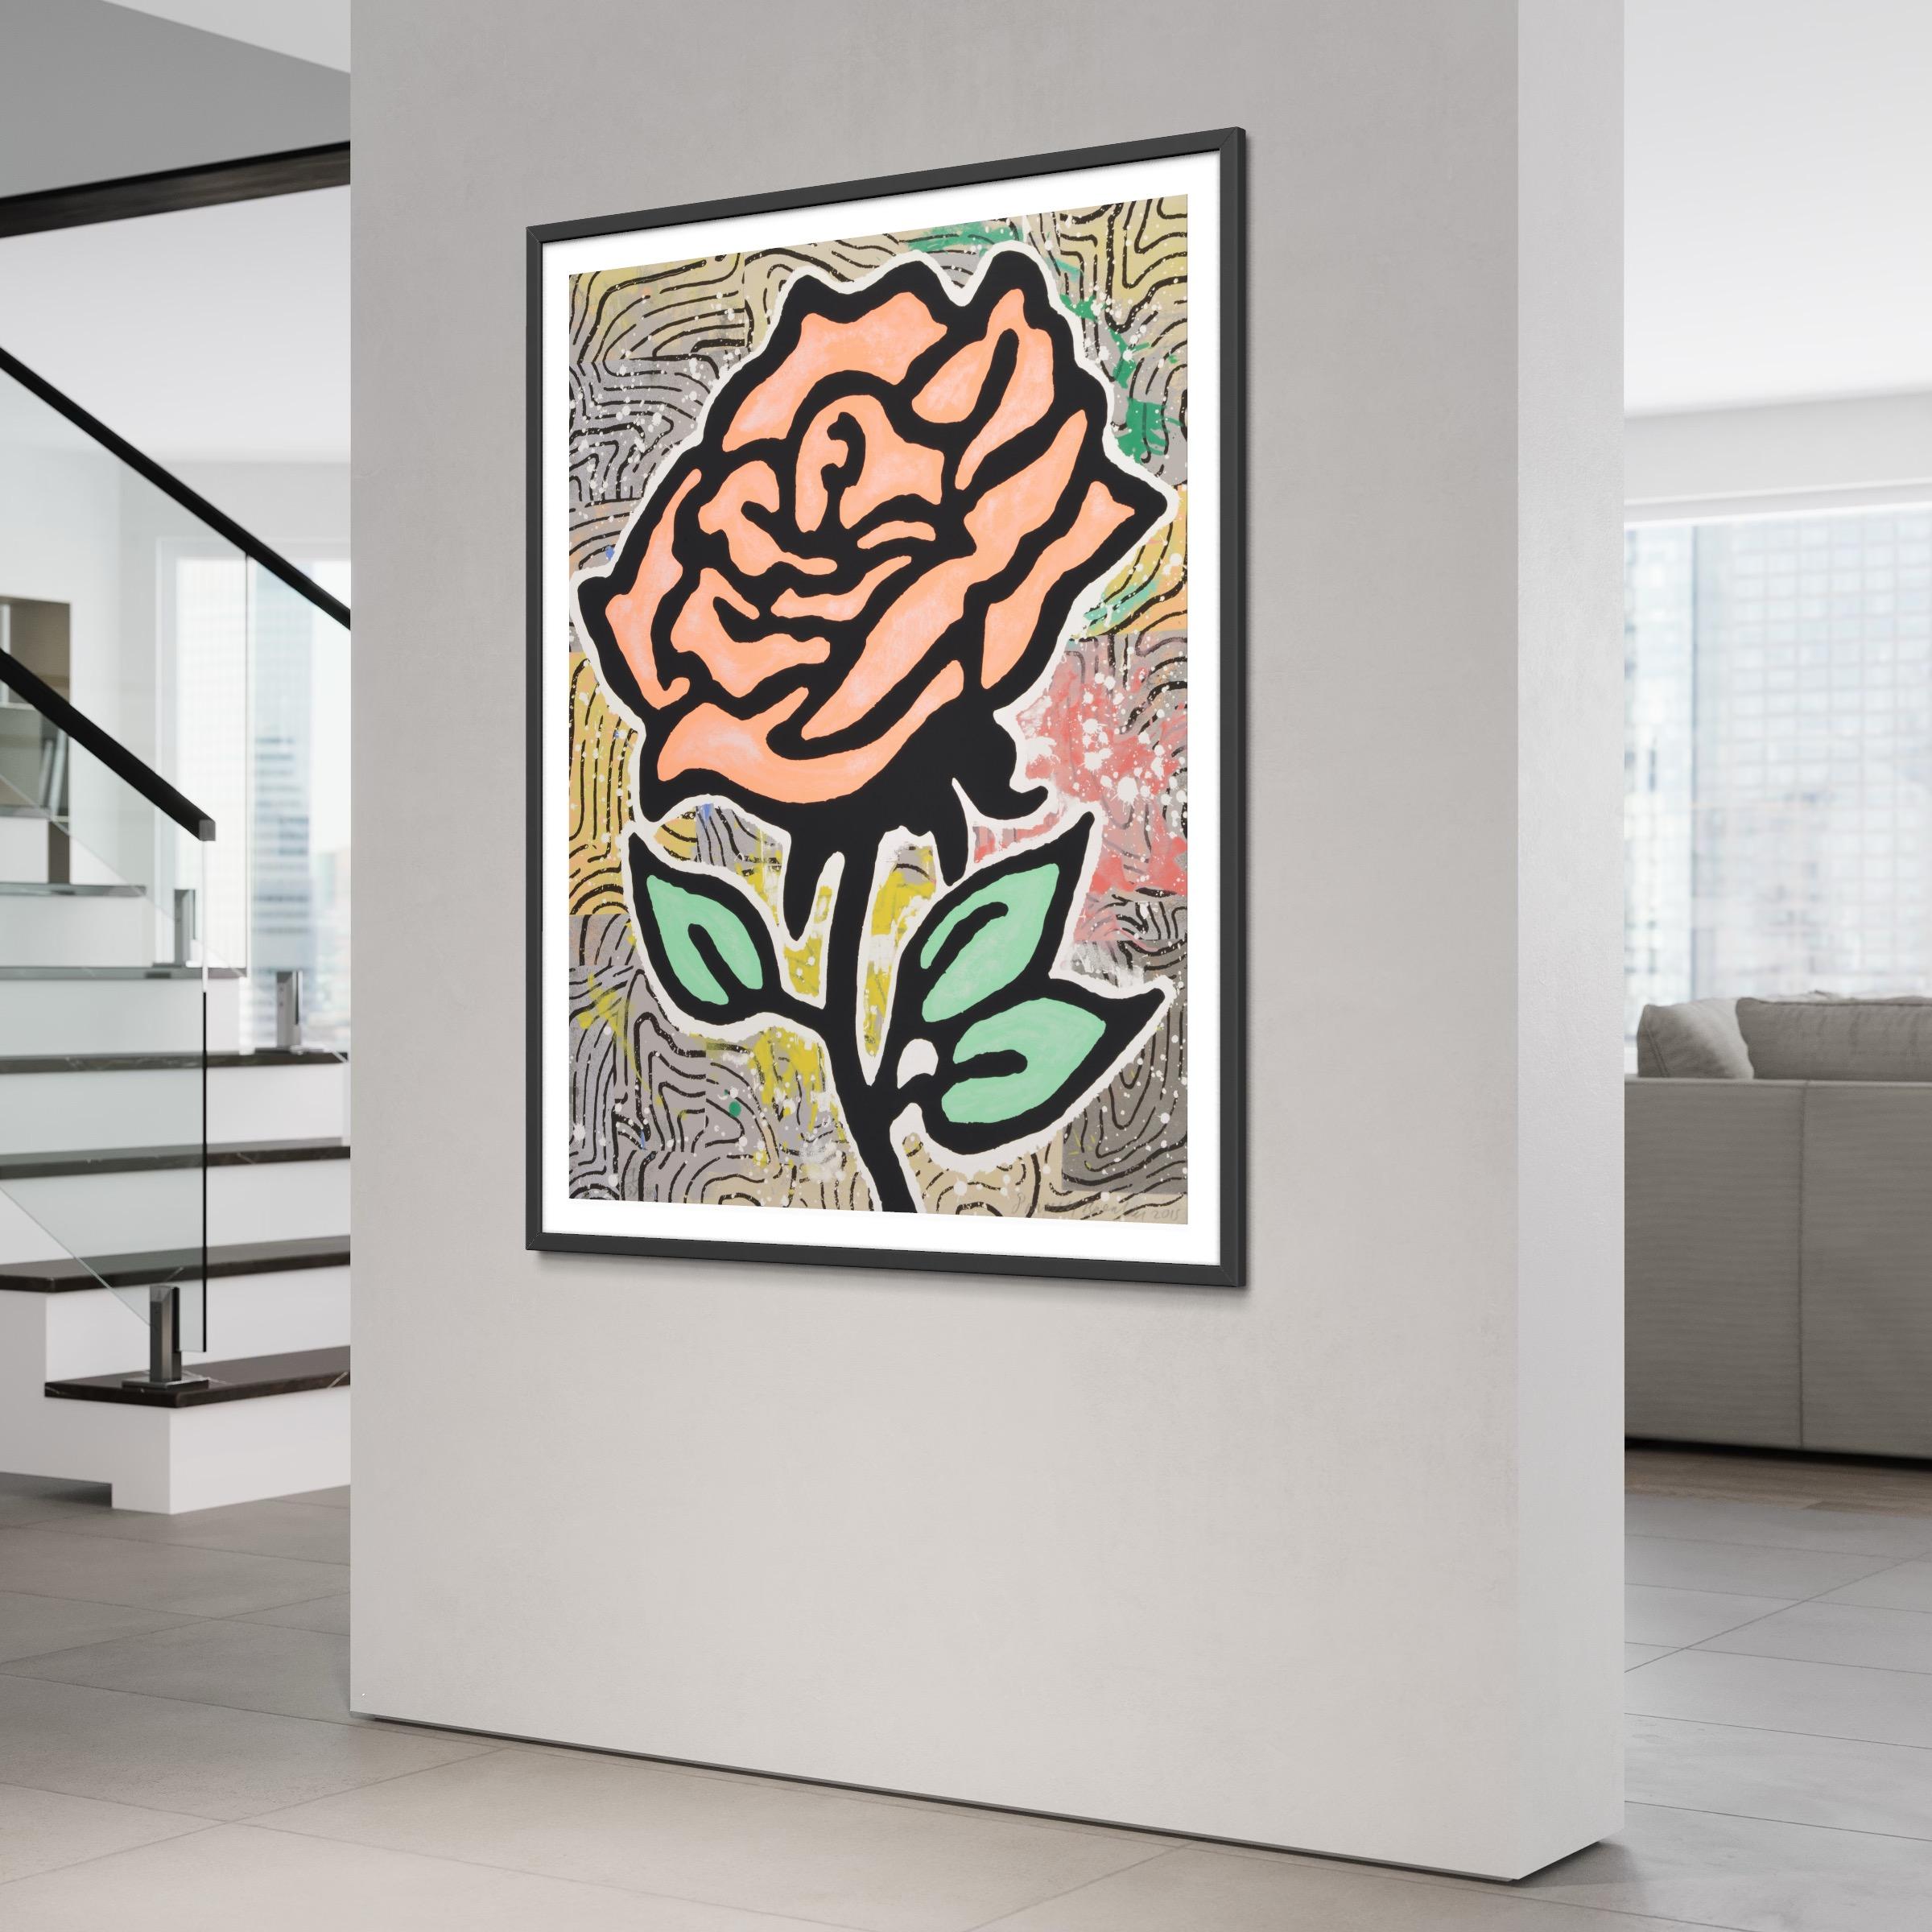 Orange Rose by Donald Baechler, Contemporary art, Silkscreen, American  For Sale 2